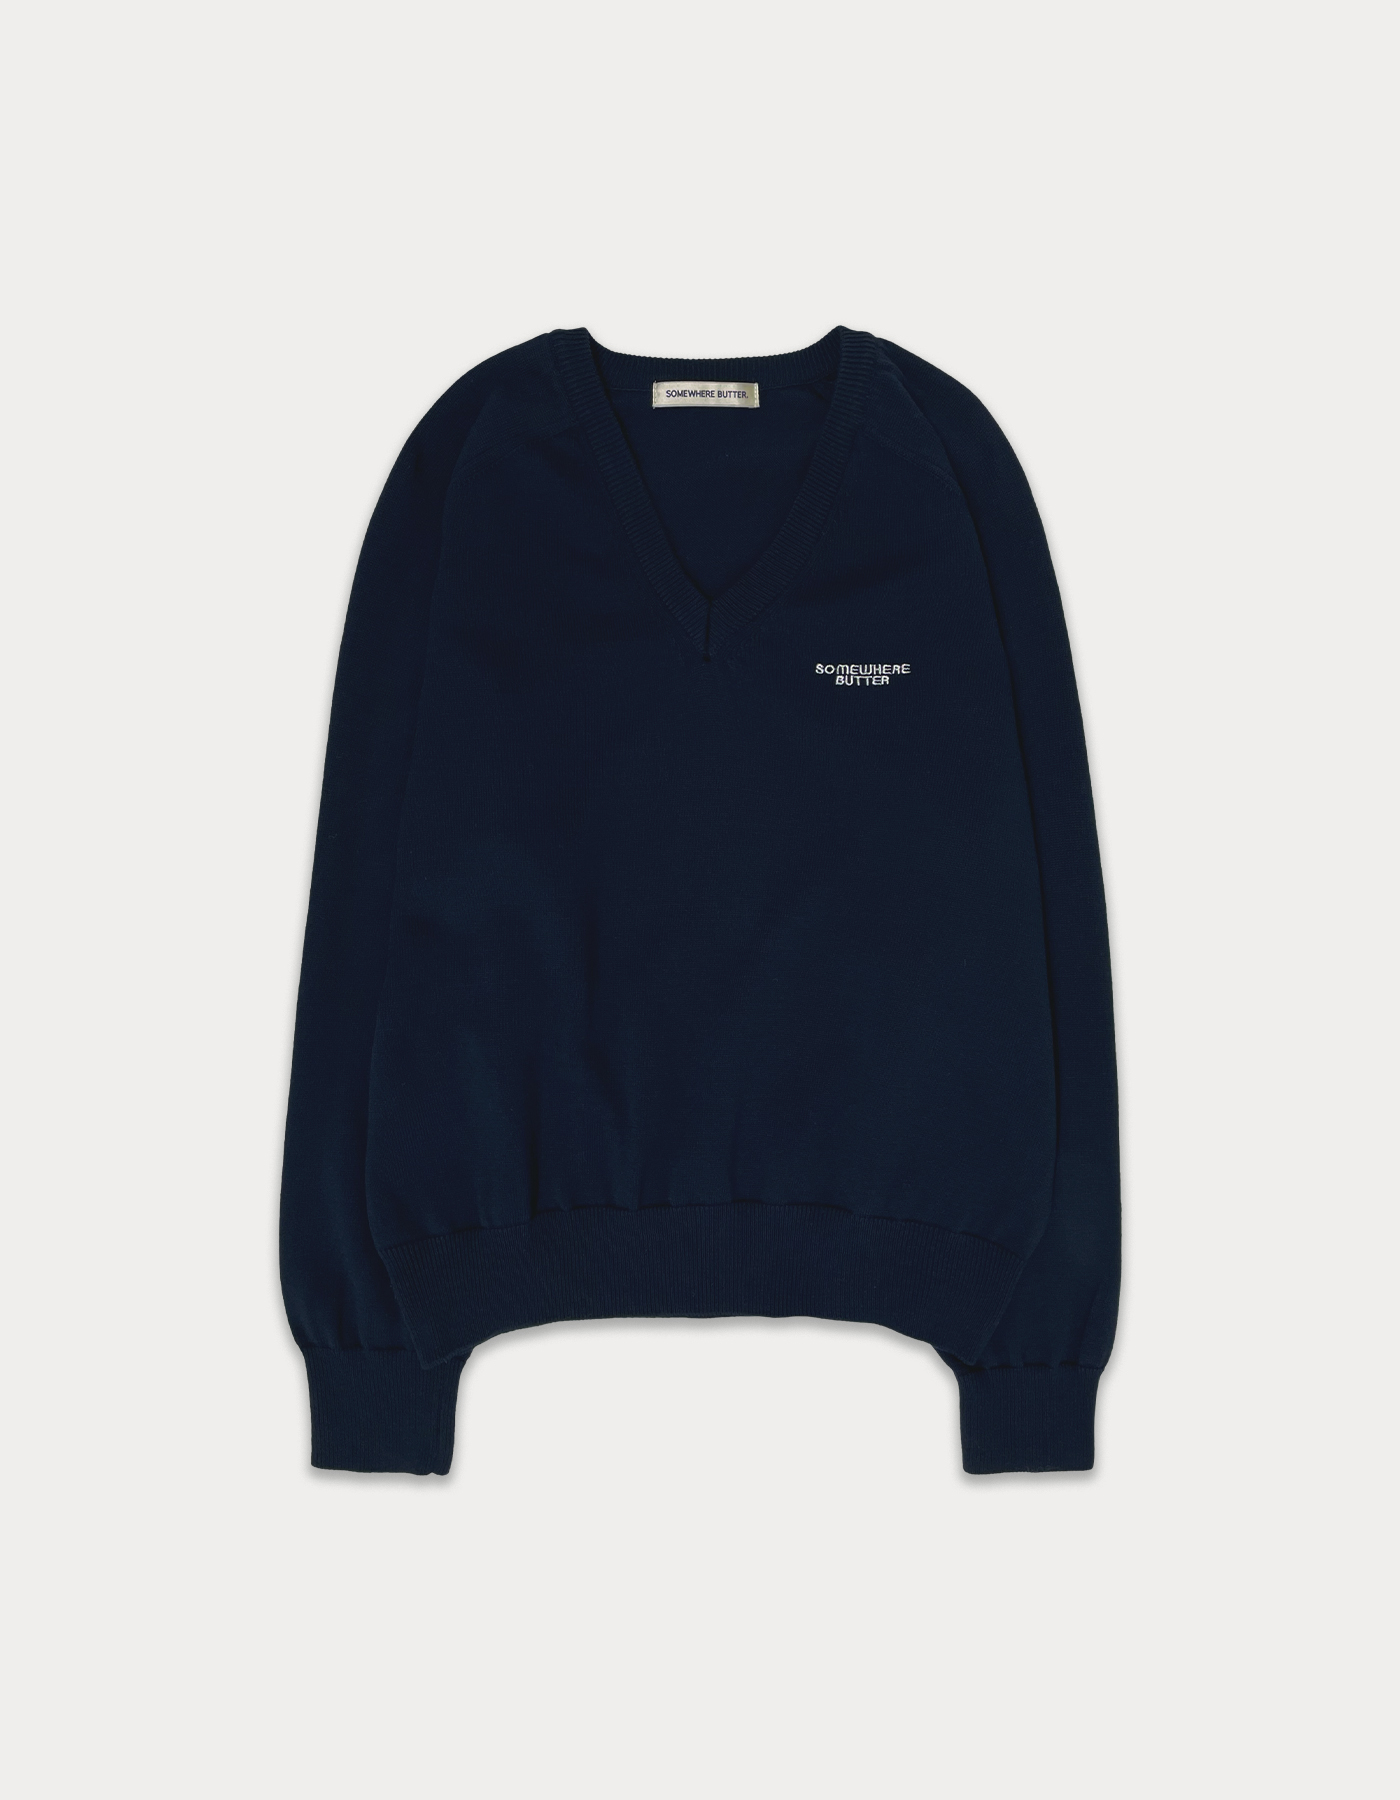 [3rd Order 5.10 출고] Classy logo cotton v-neck knit - navy